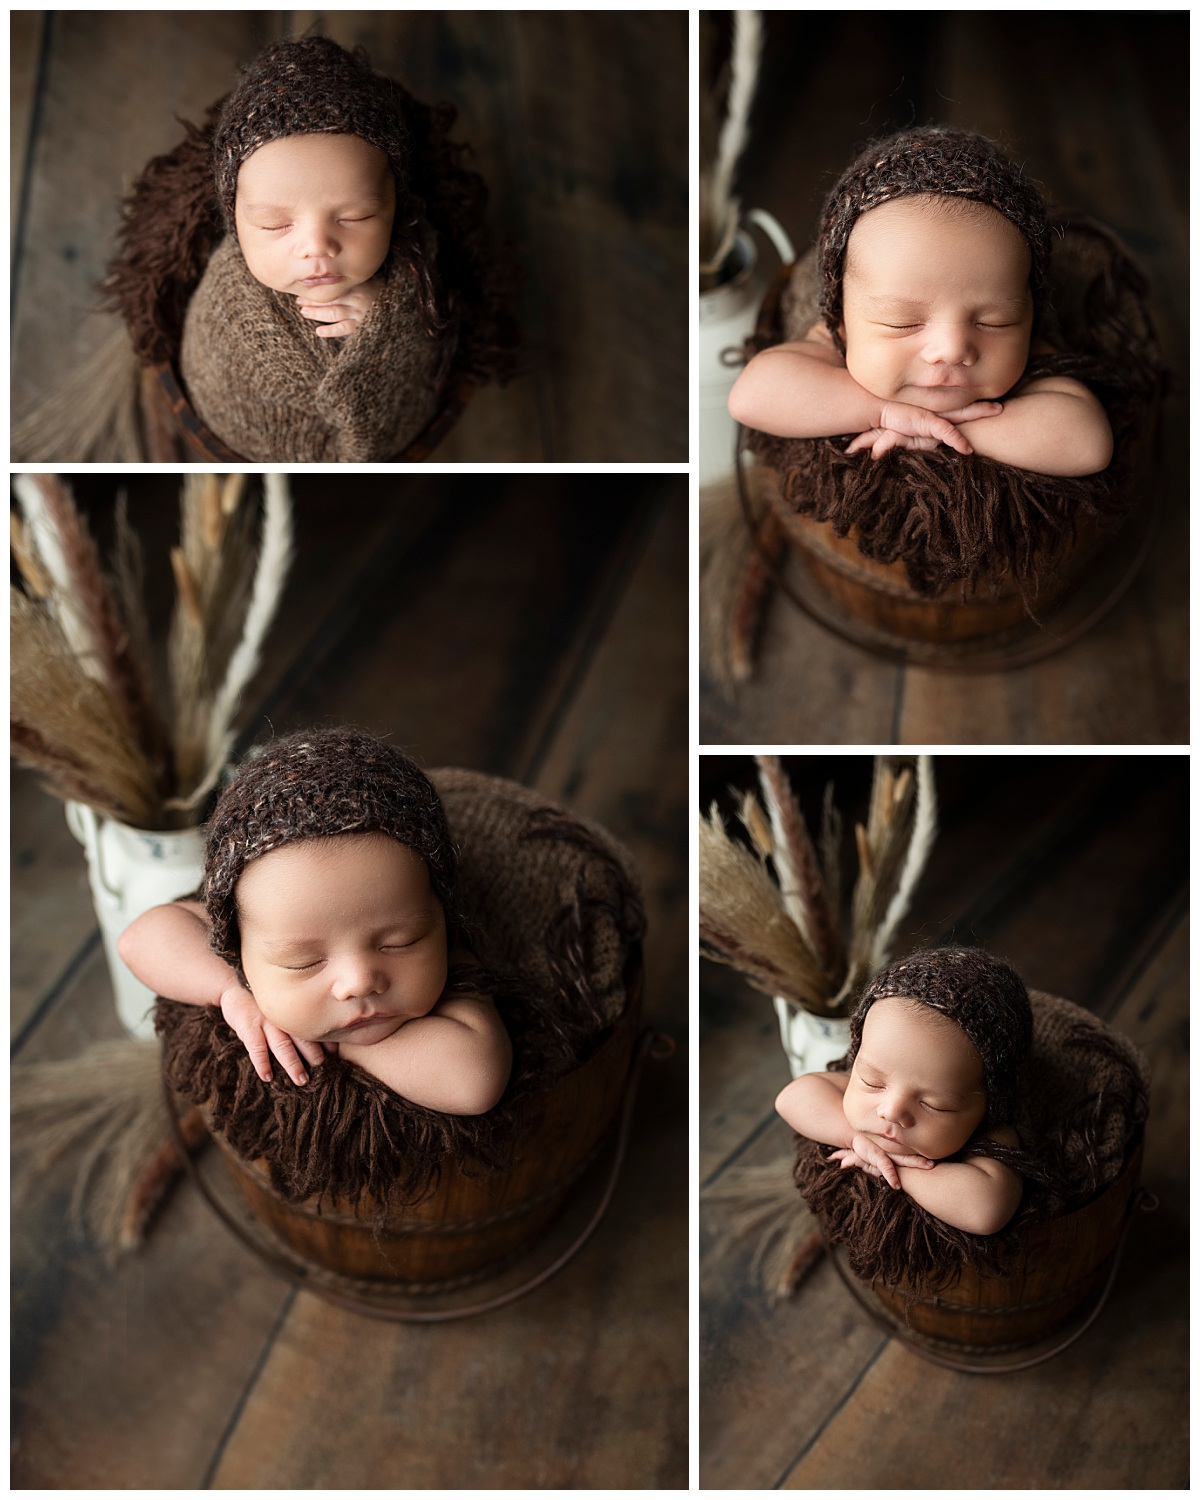 Newborn boy in a bucket with a brown bonnet.